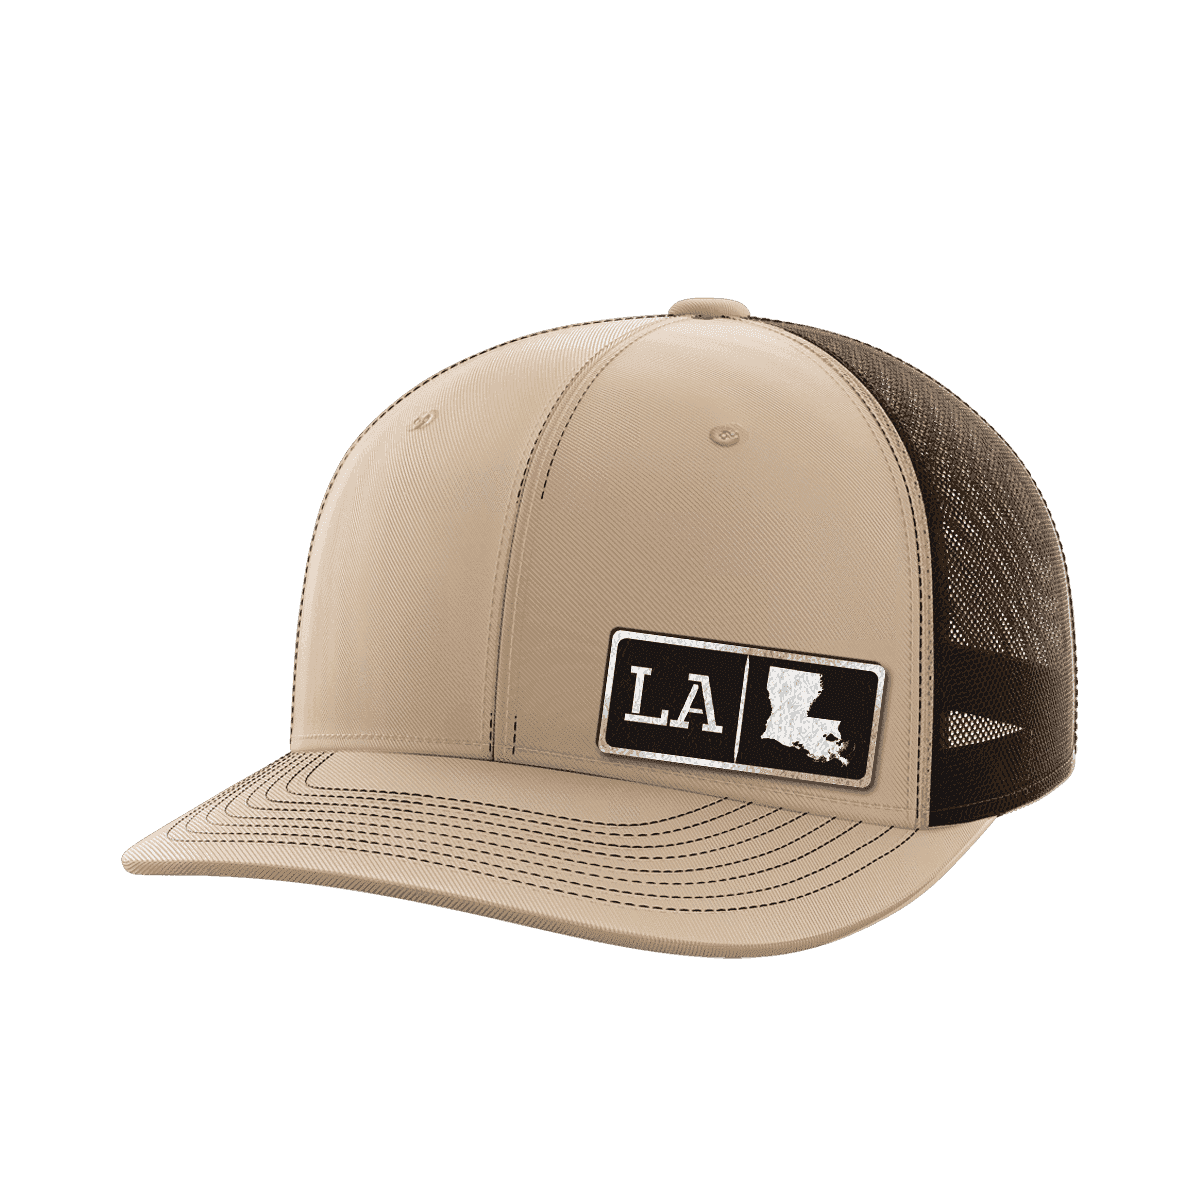 Louisiana Homegrown Hats - Greater Half